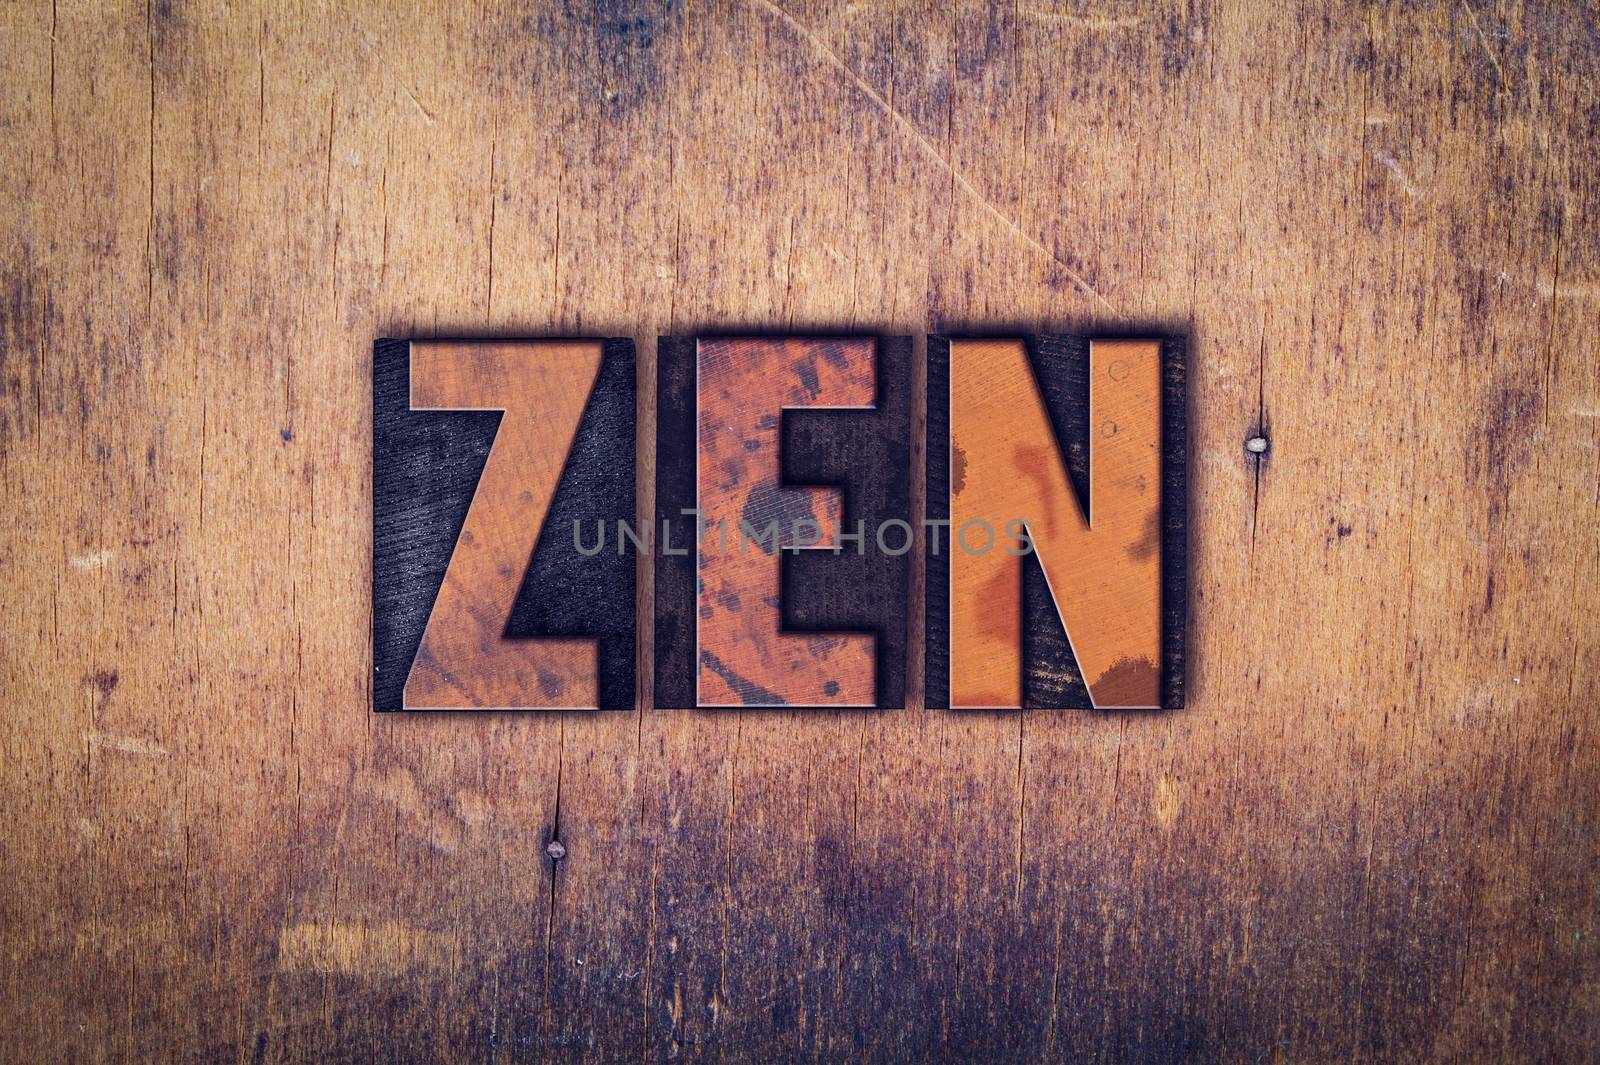 The word "Zen" written in dirty vintage letterpress type on a aged wooden background.